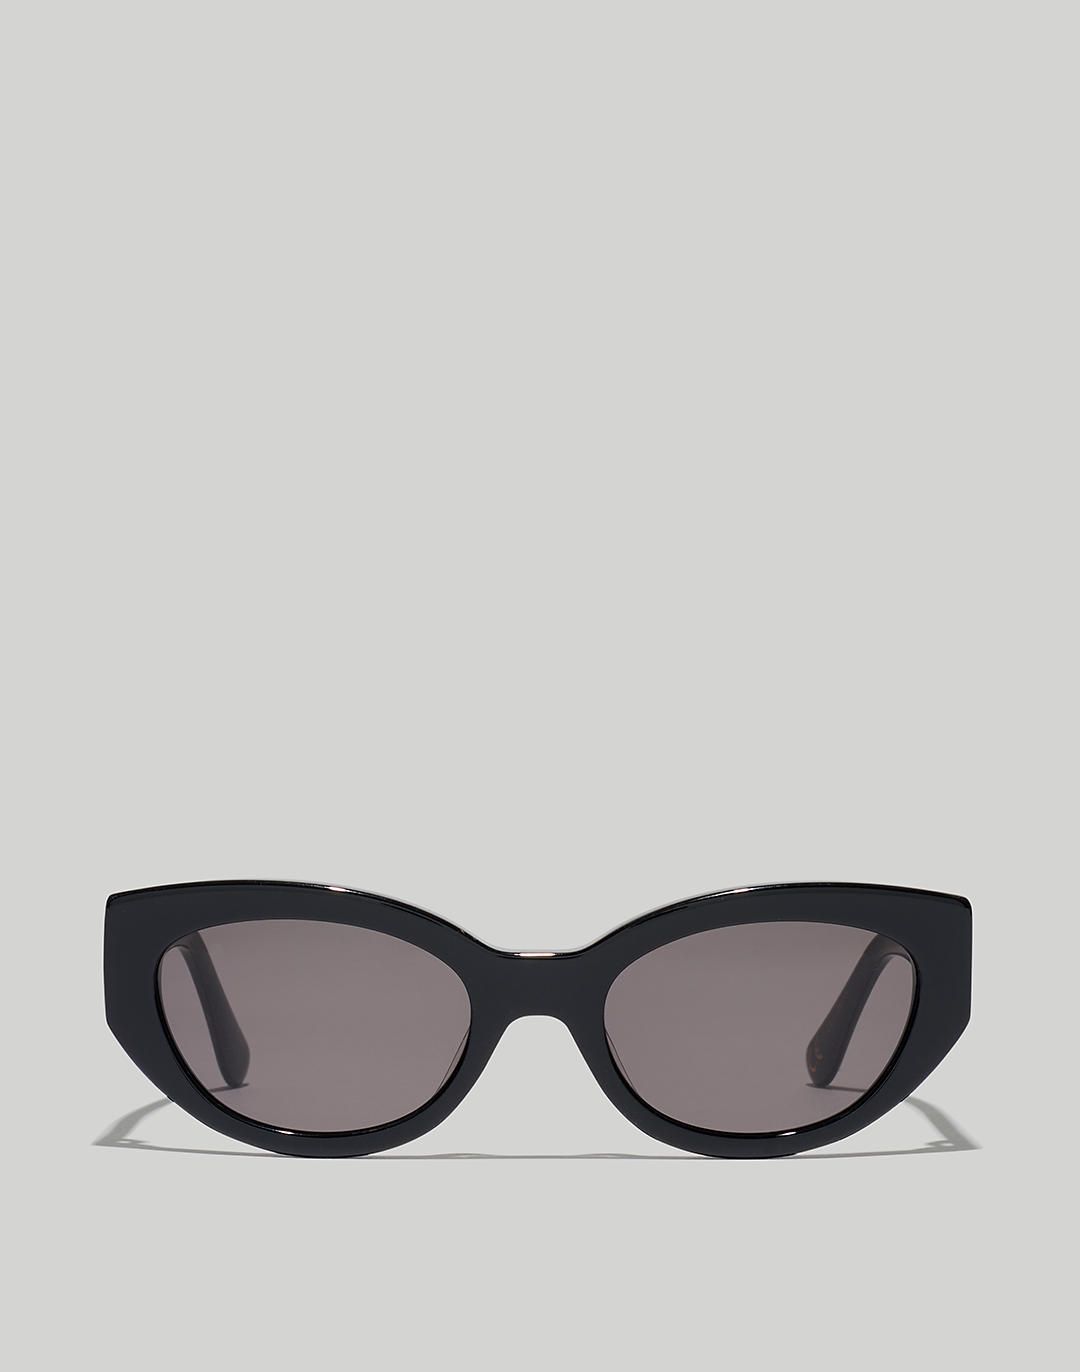 Demmera Sunglasses | Madewell